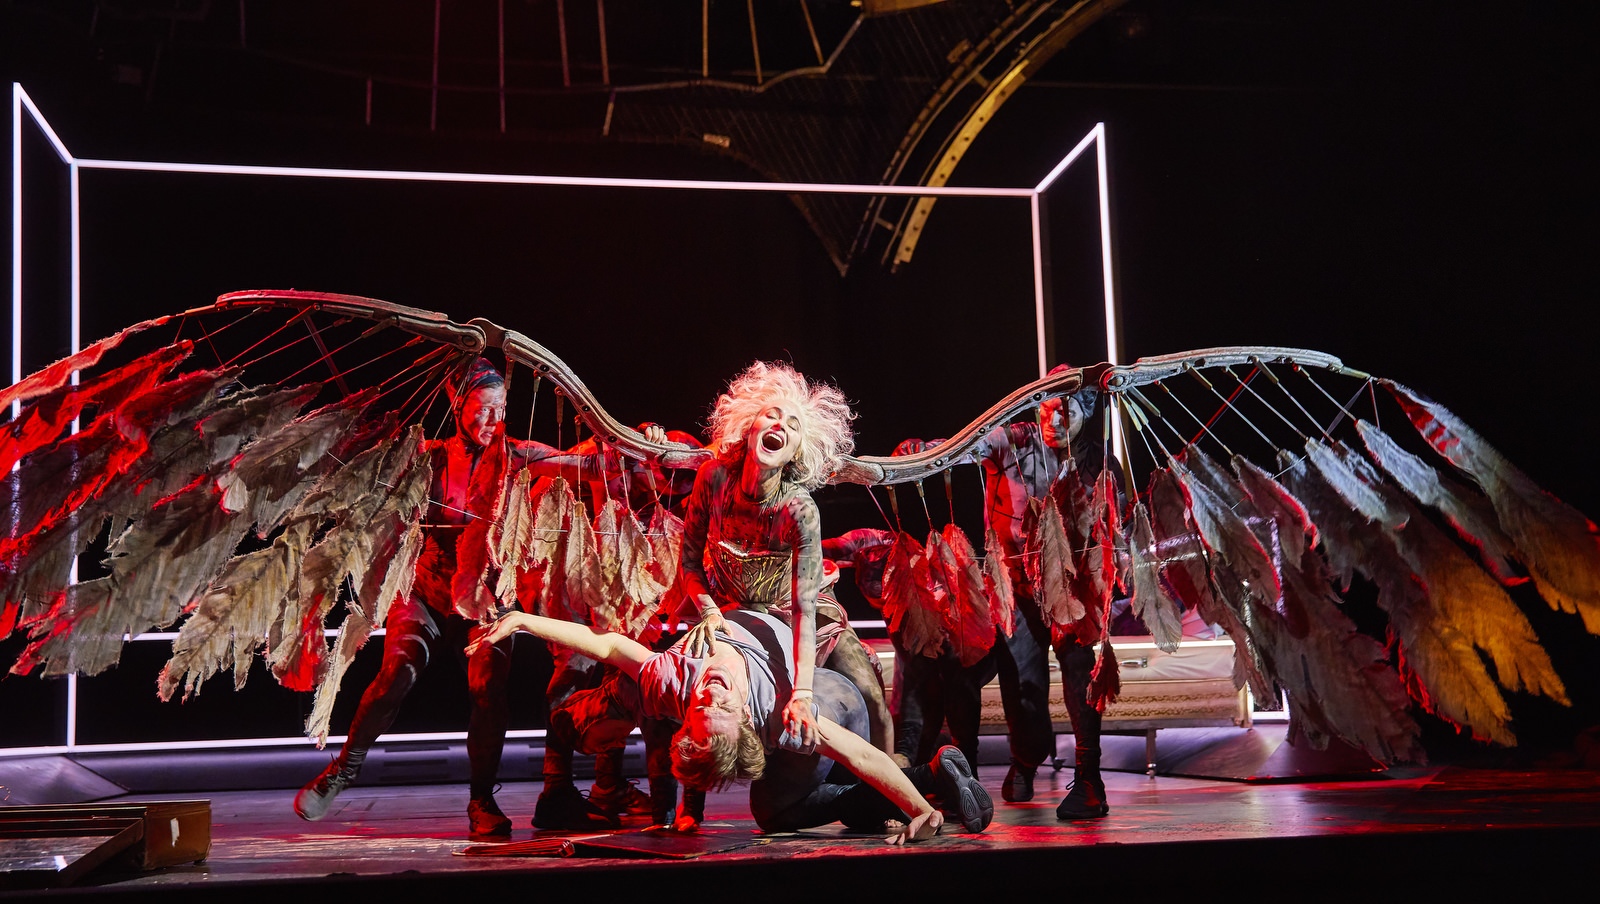   Angels in America   Perestroika  Neil Simon Theatre, New York, N.Y., 2018 